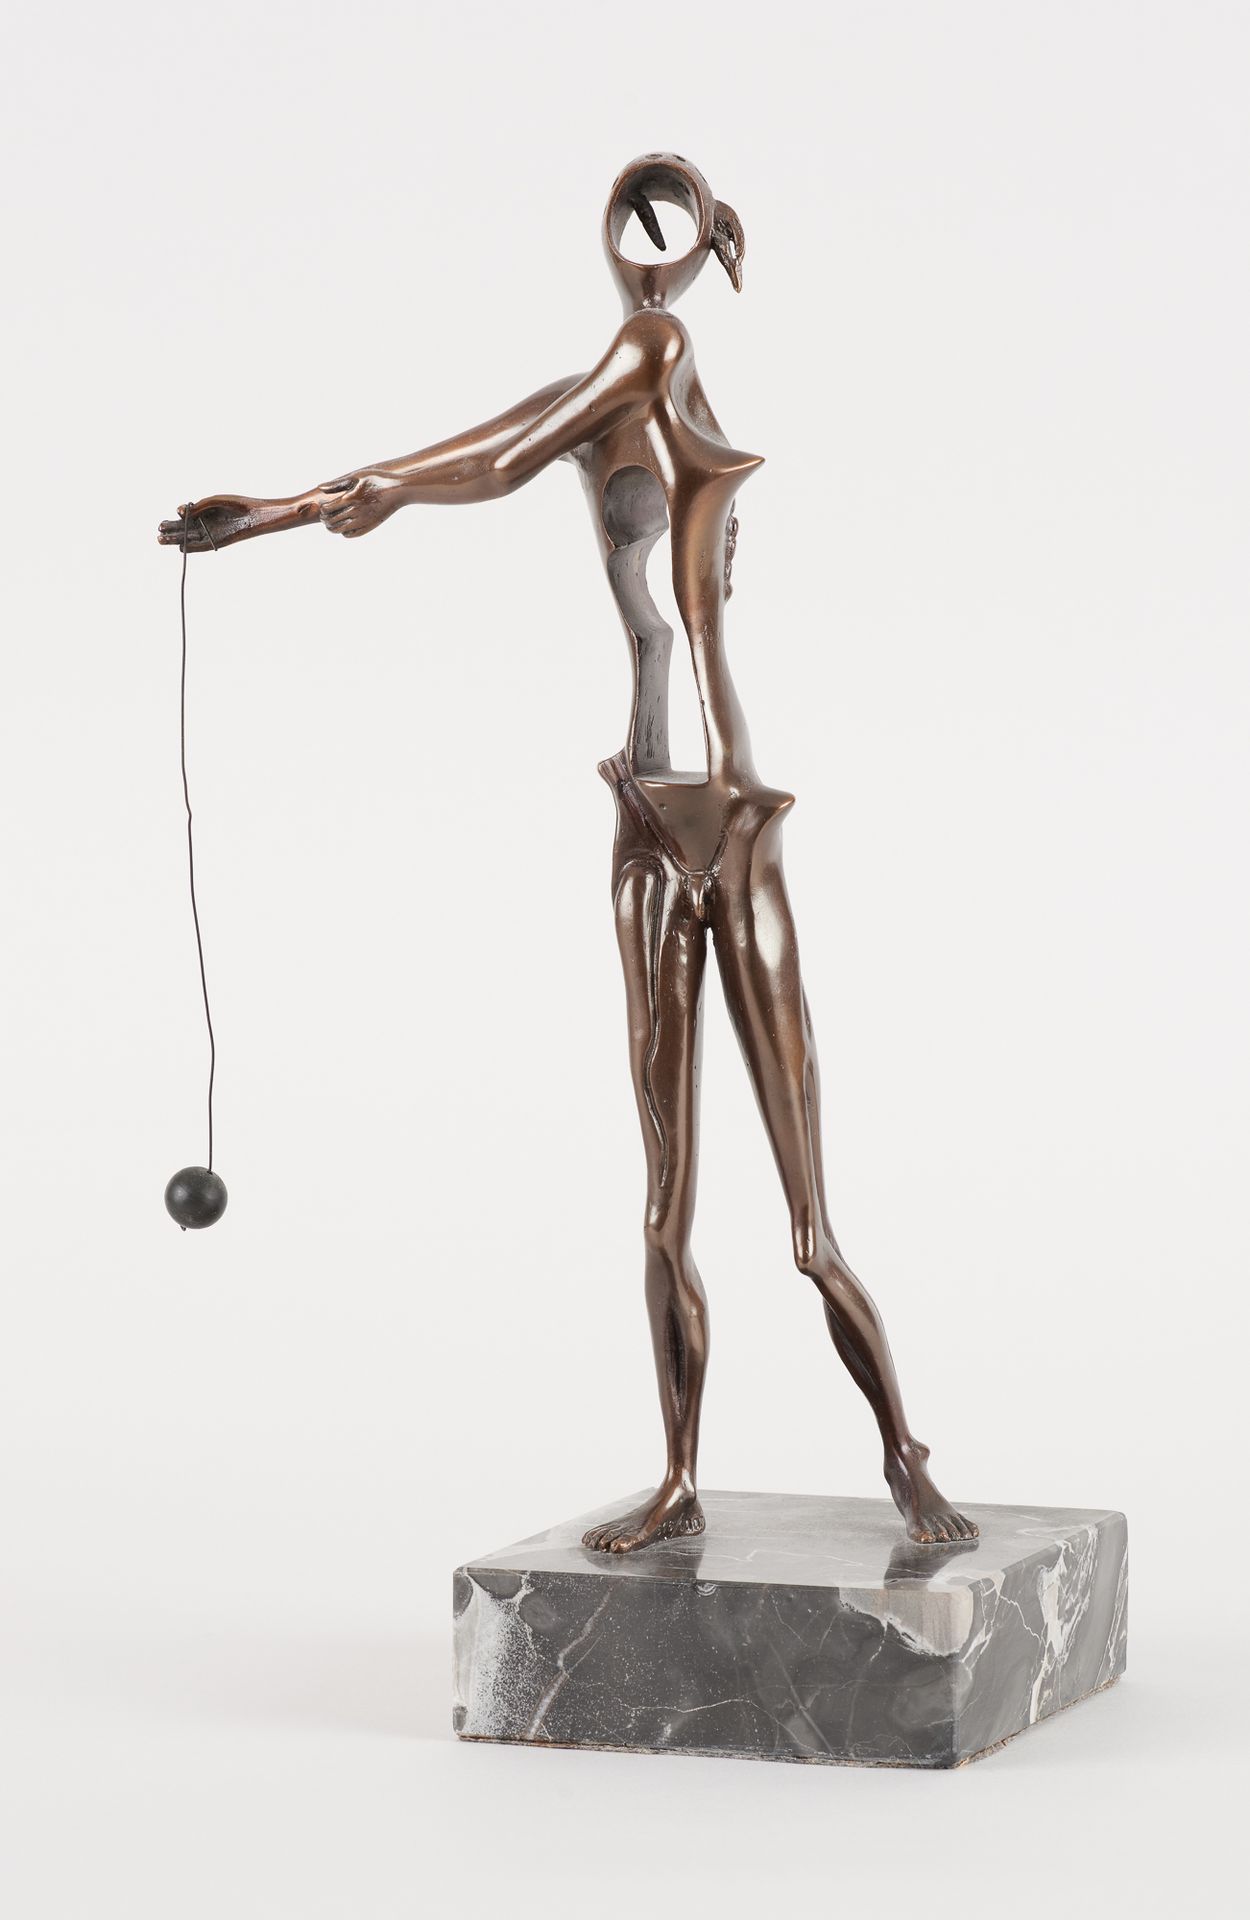 Salvador DALI École espagnole (1904-1989) 
Bronzeskulptur mit brauner Patina: "H&hellip;